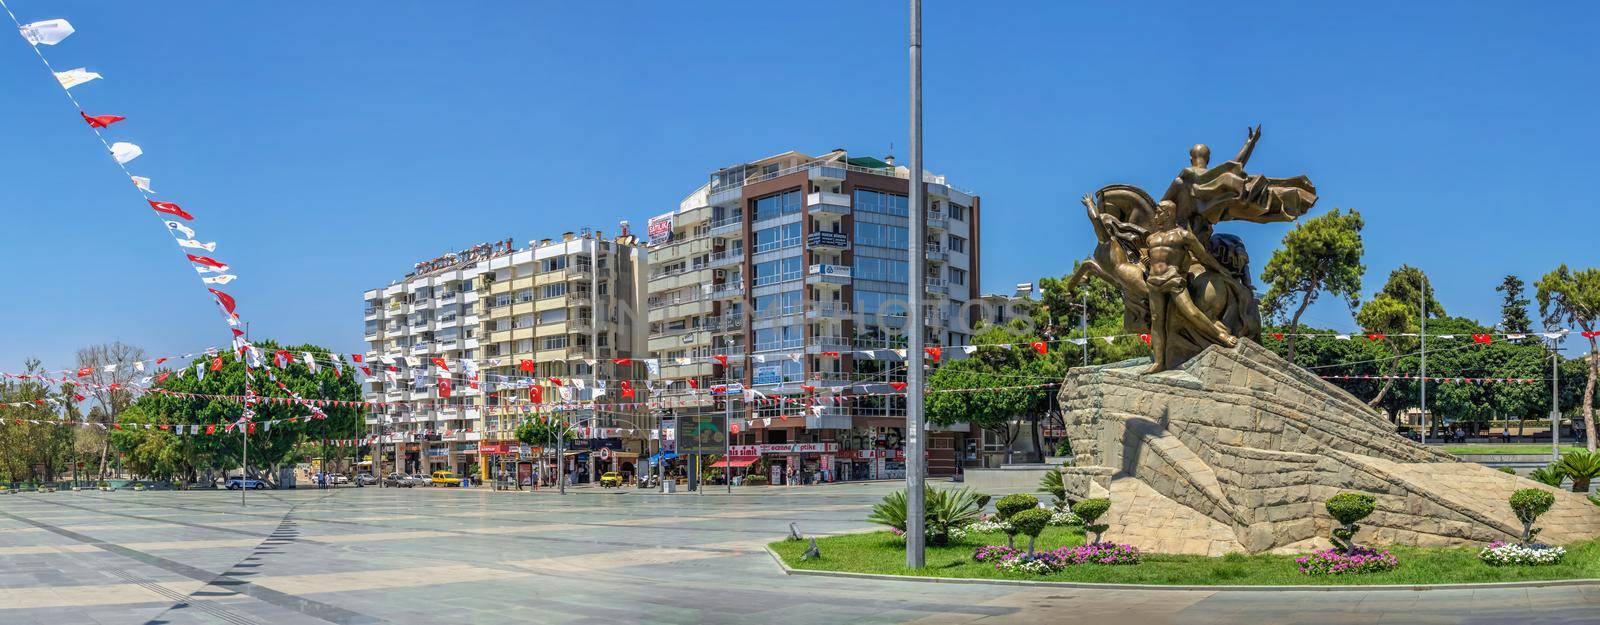 Antalya, Turkey 19.07.2021. Republic square in Antalya, Turkey, on a sunny summer day